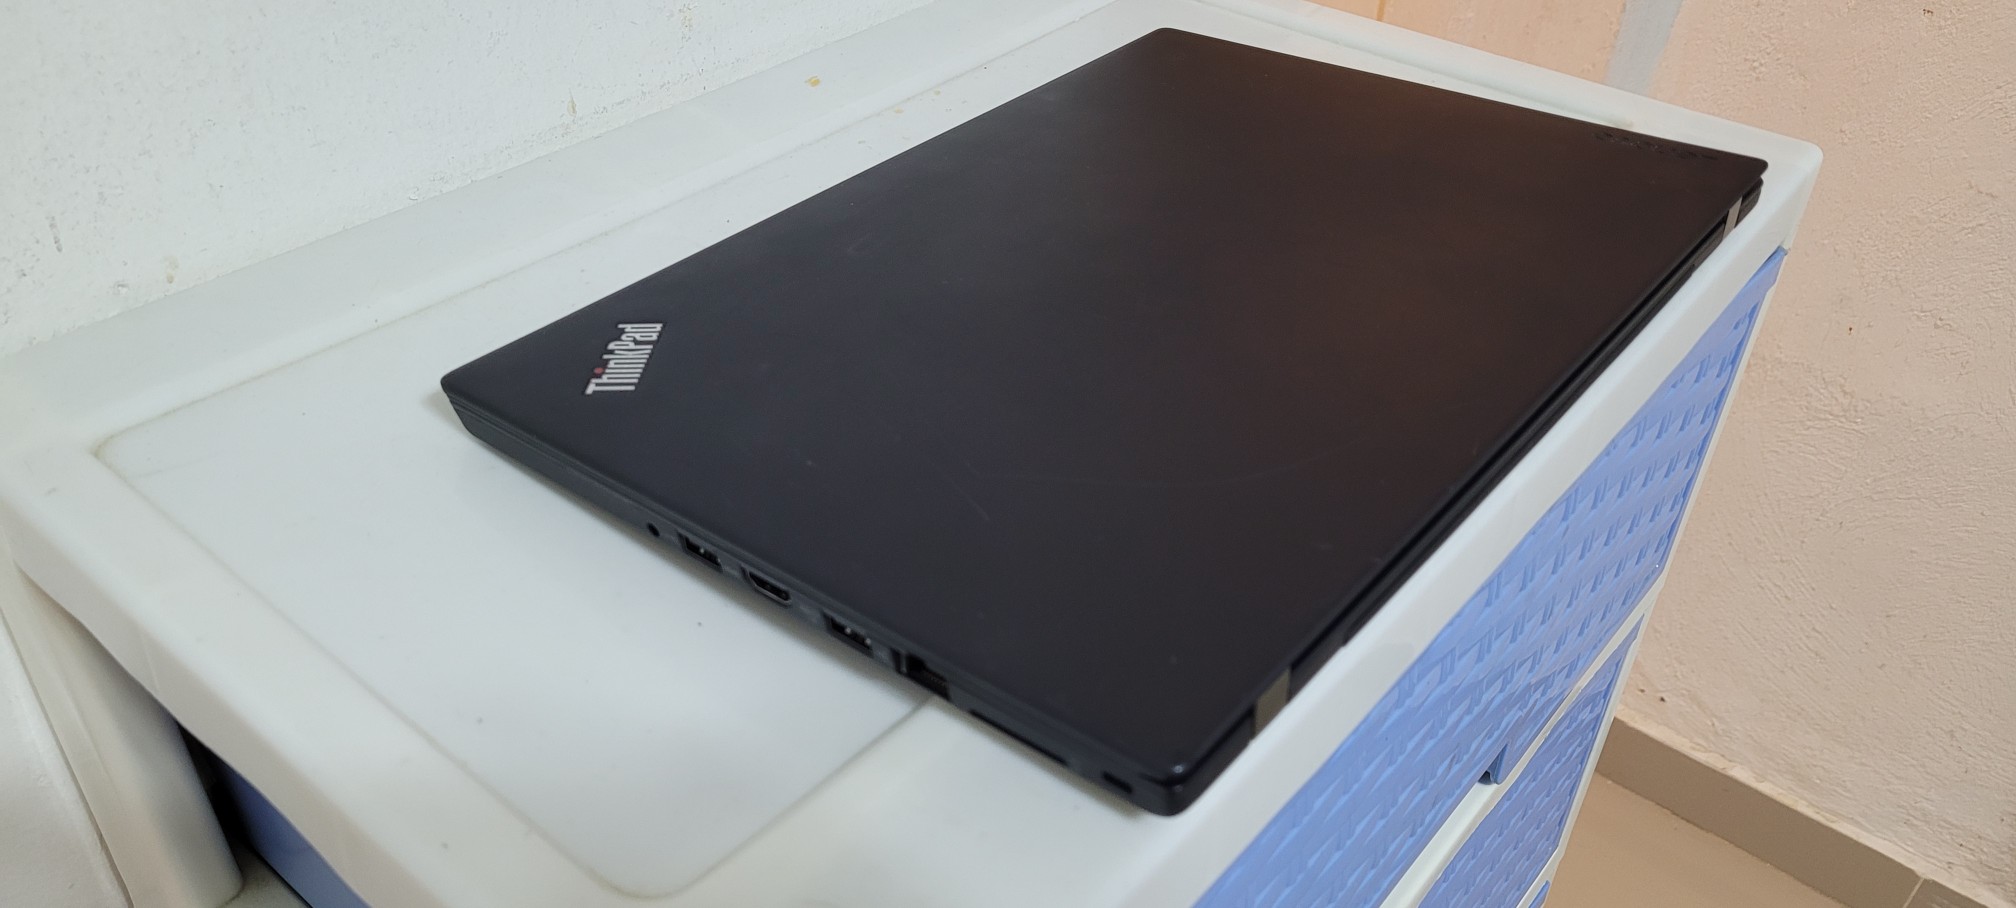 computadoras y laptops - Lenovo Slim 14 Pulg Core i7 Ram 8gb Disco 256gb Solido hdmi 2